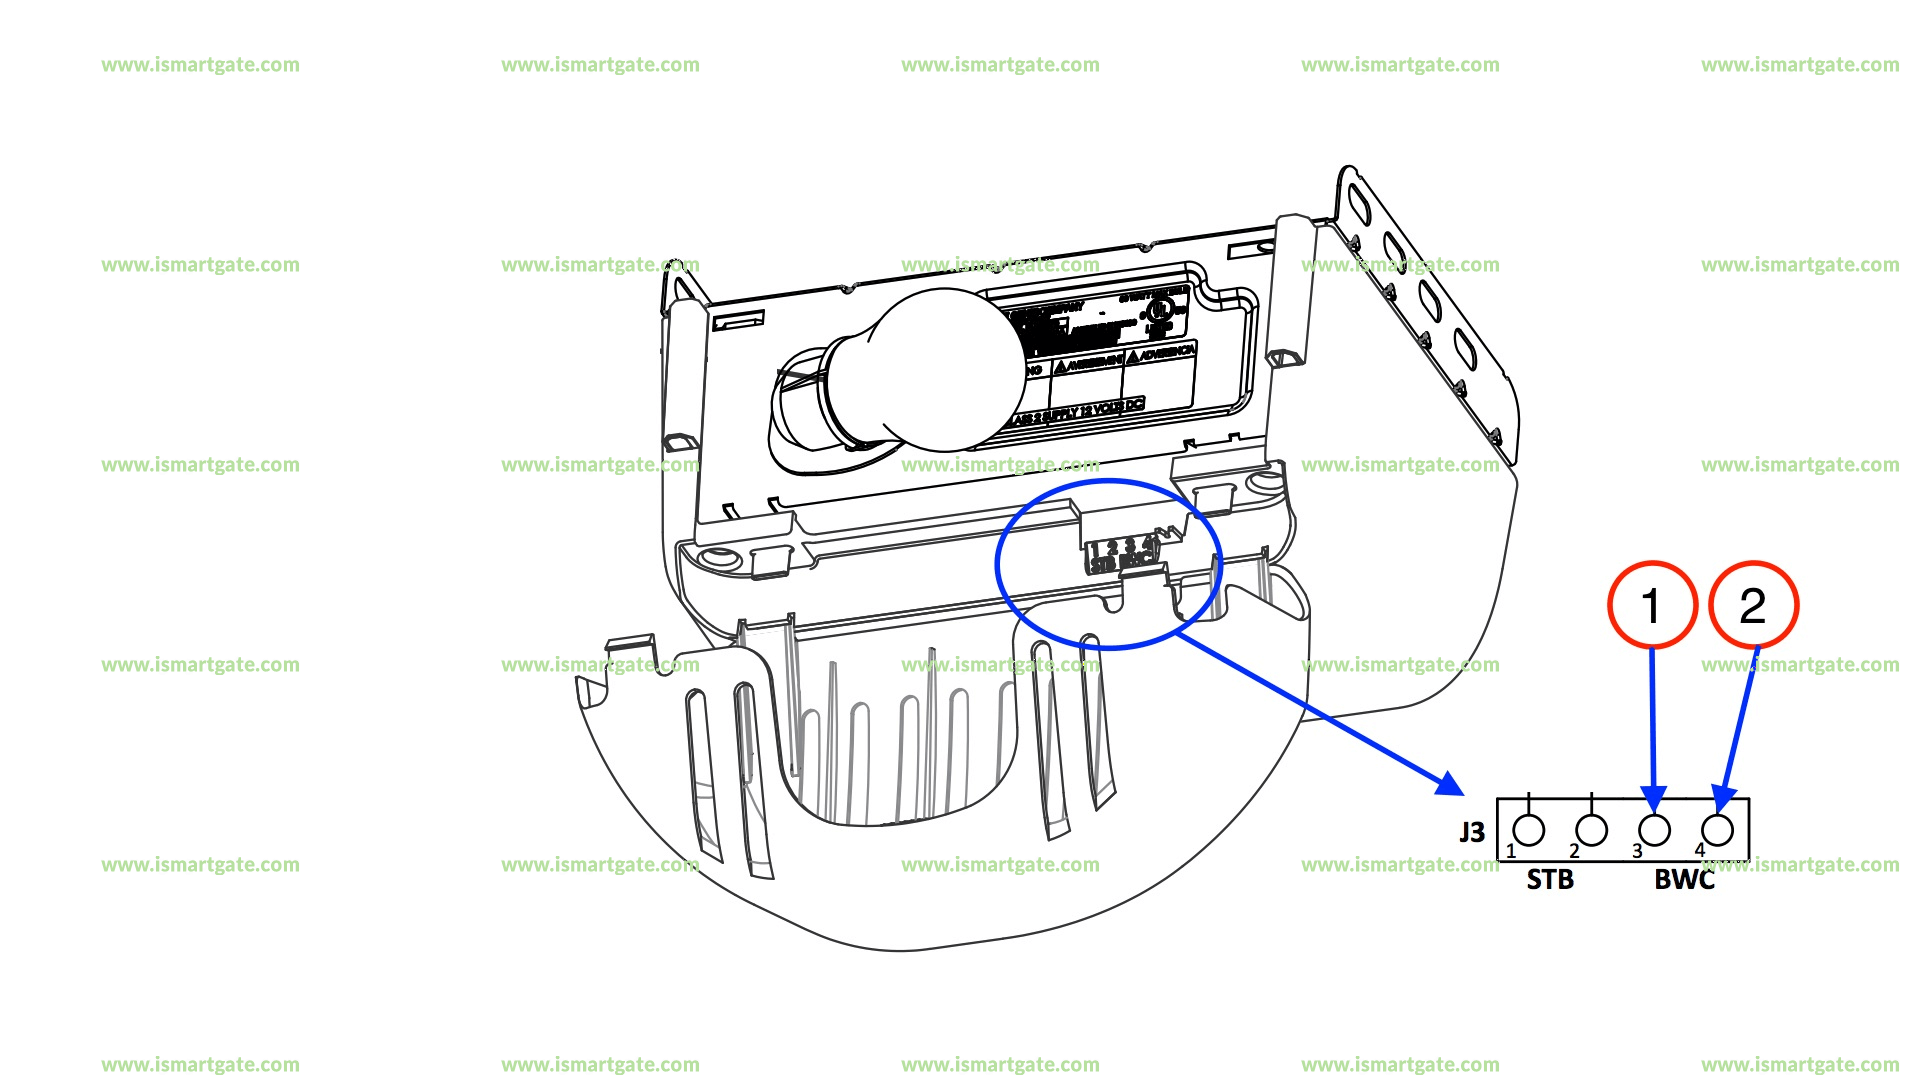 Wiring diagram for GENIE Model 3120